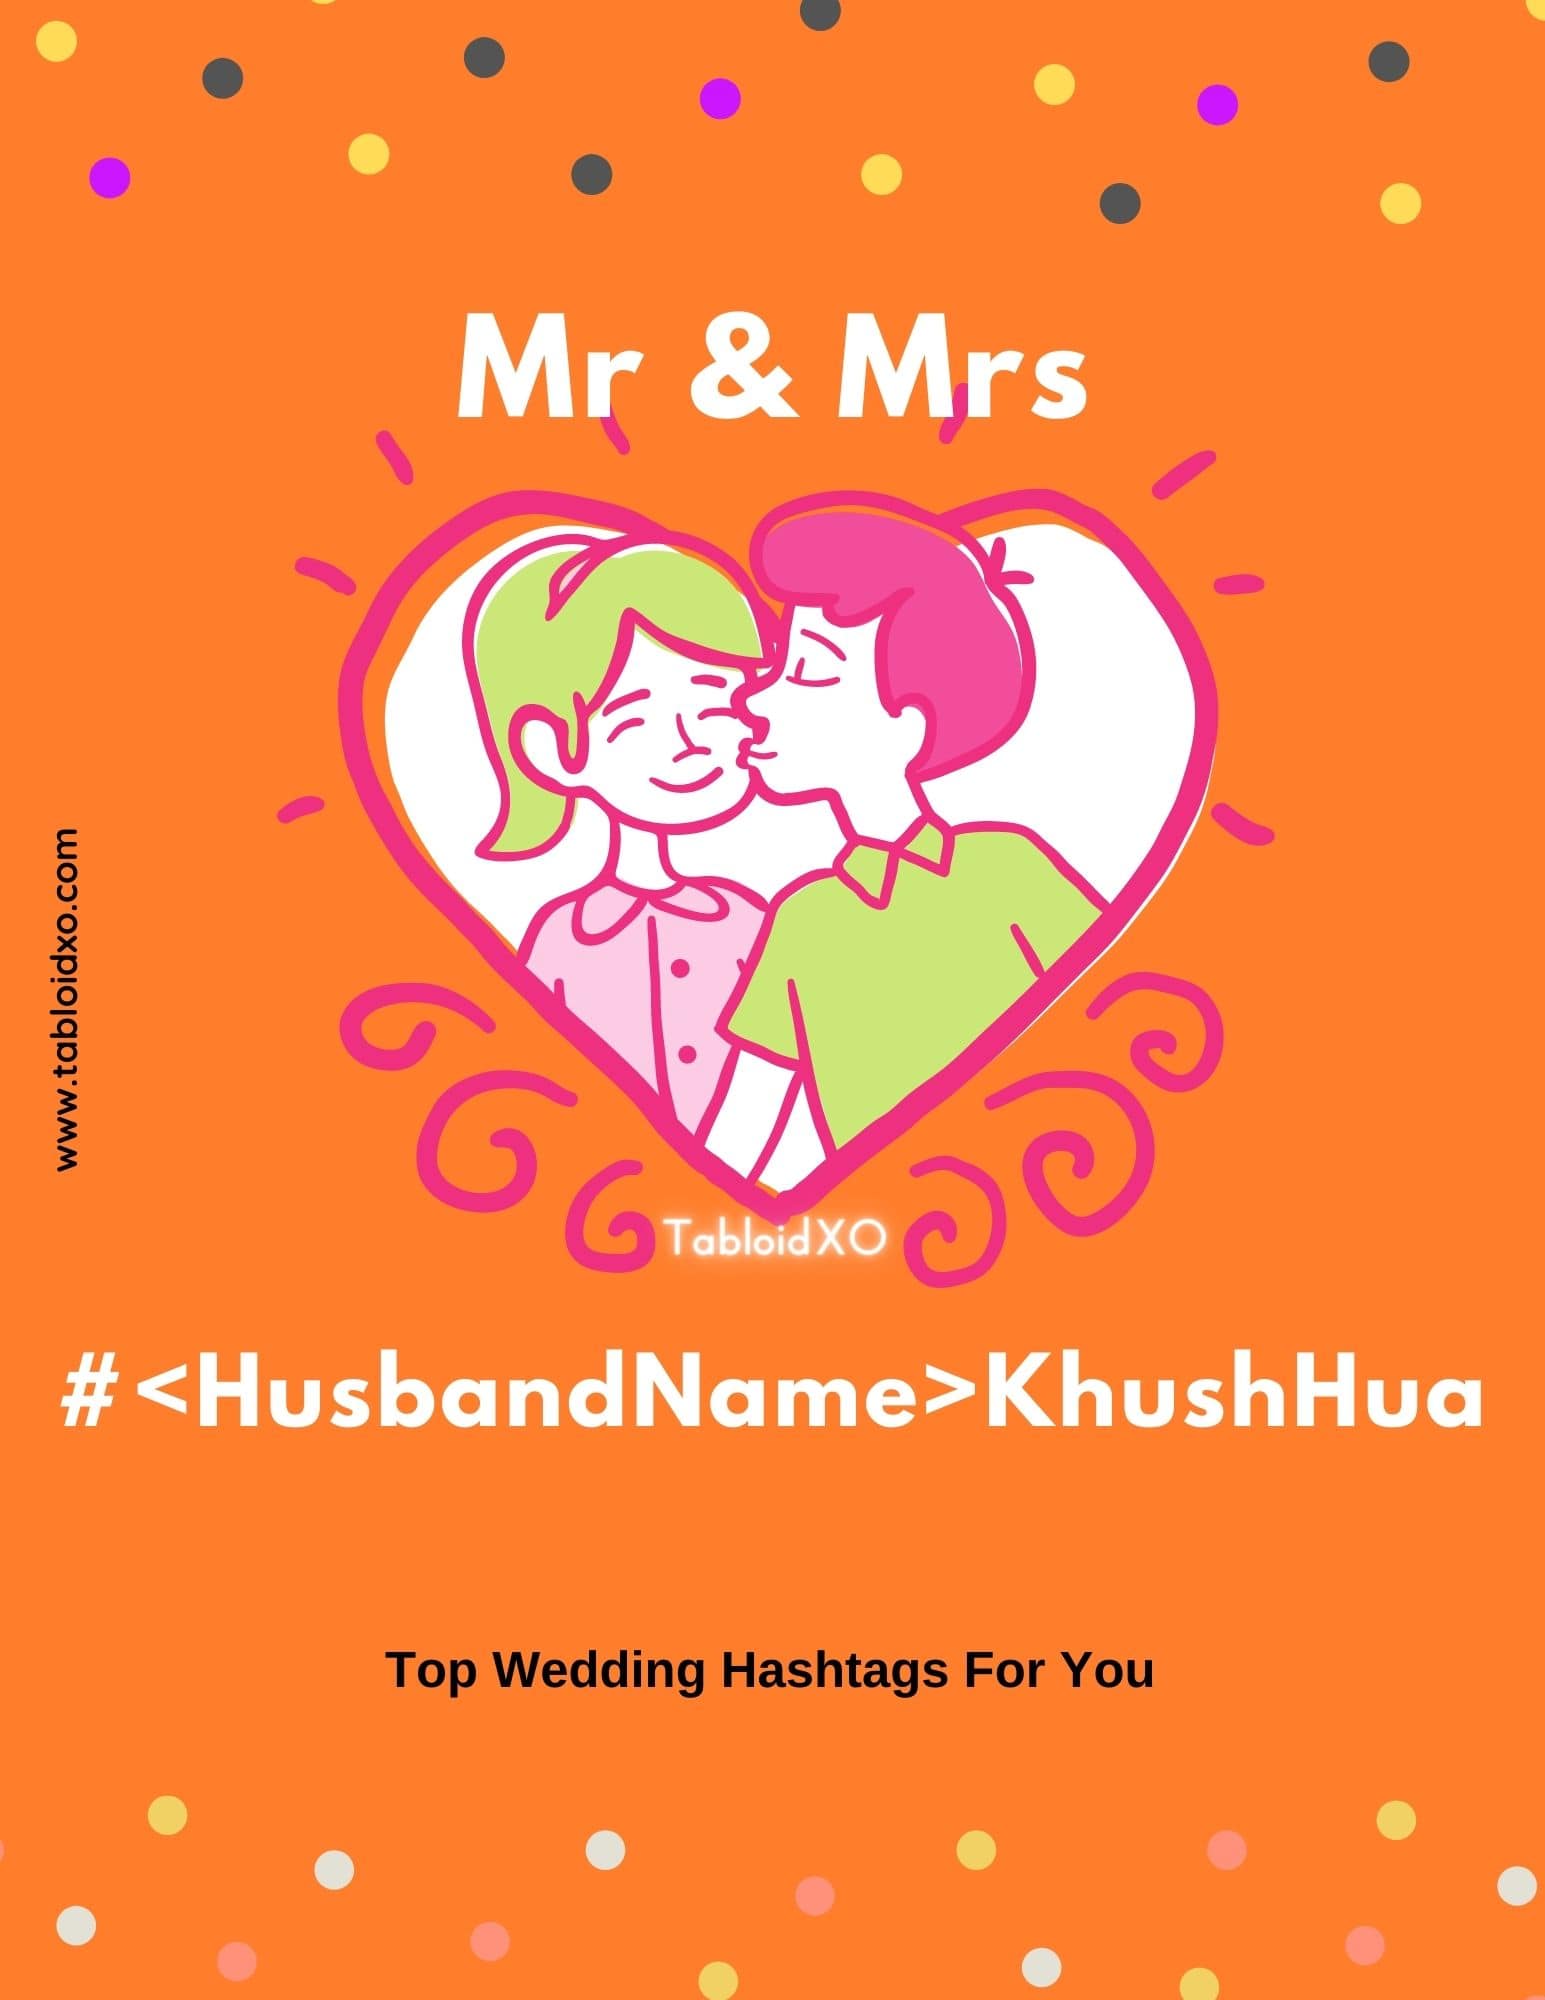 Indian wedding hashtags